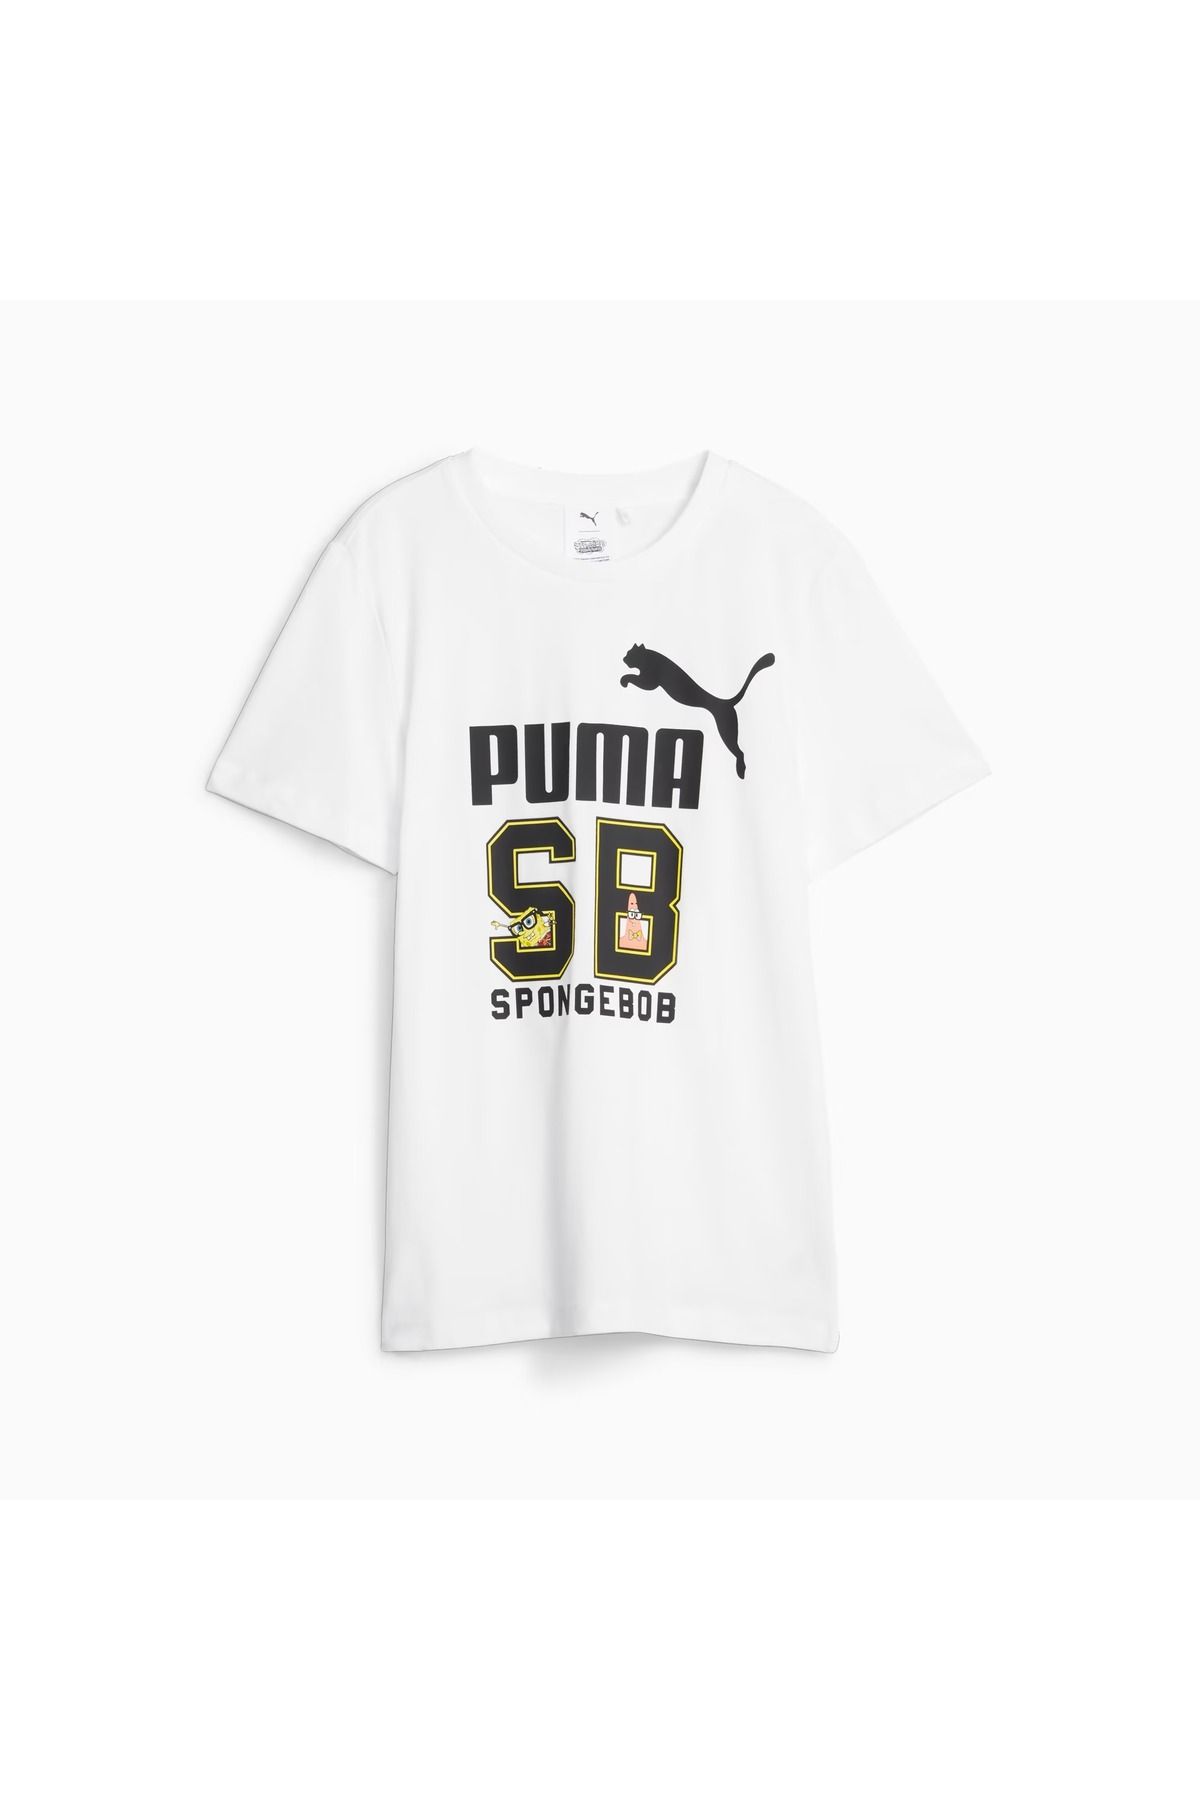 Puma X SPONGEBOB Tee PUMA White Beyaz 62221202